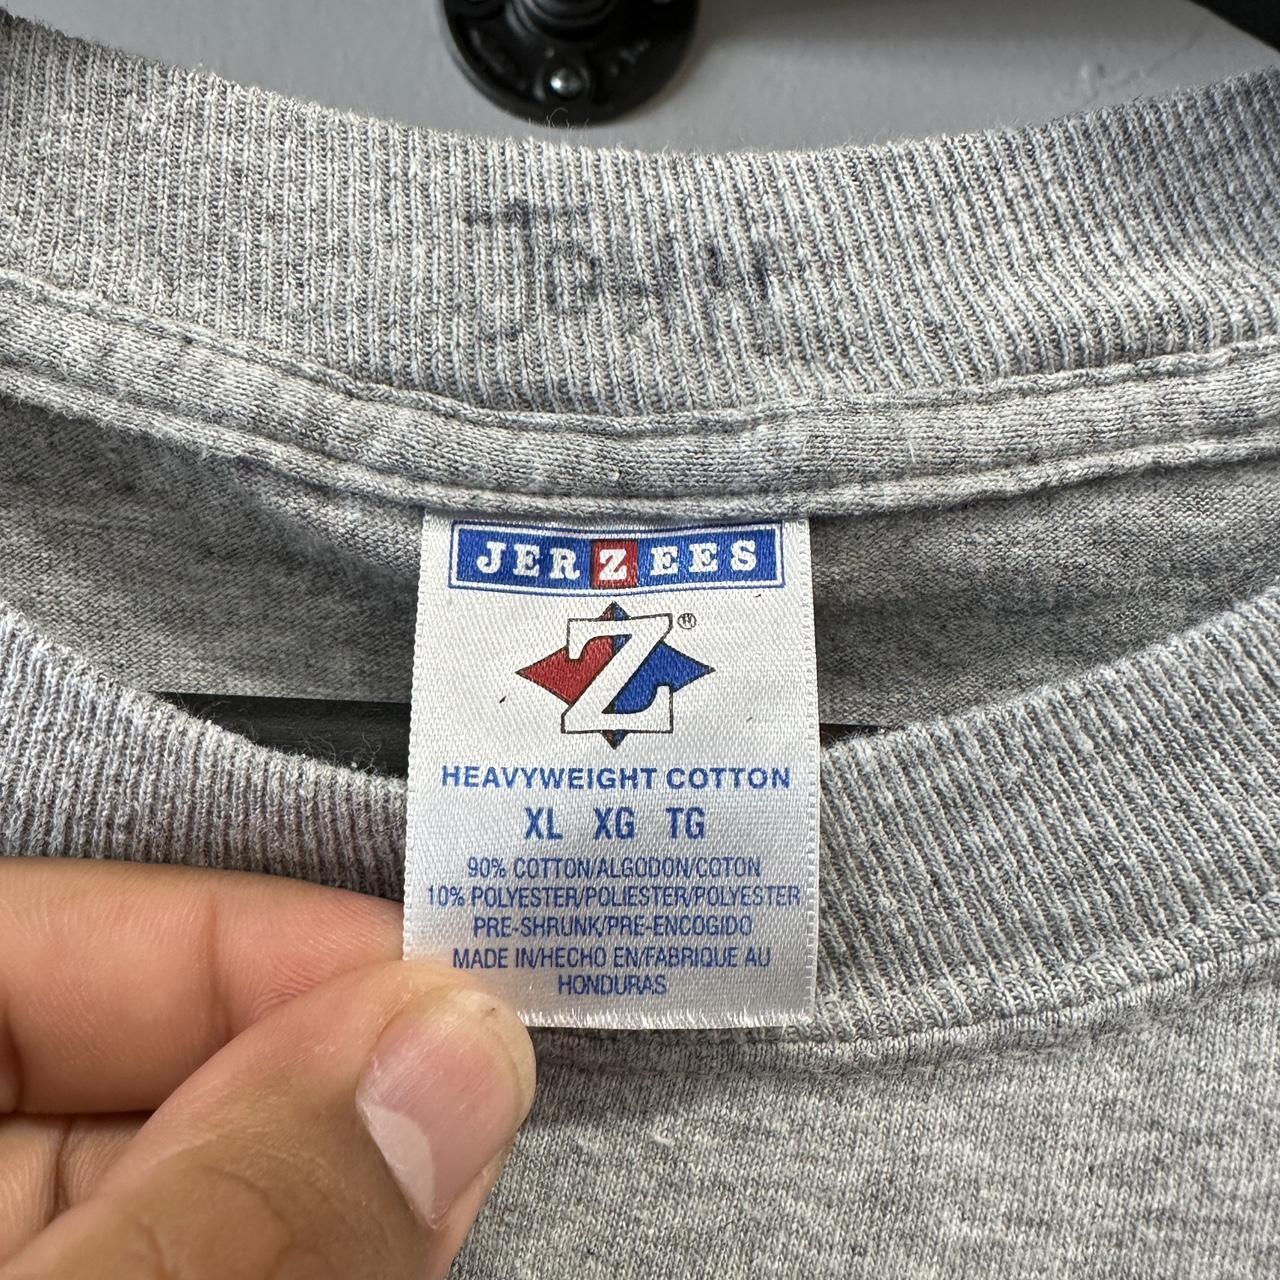 Mens Vintage Houston Astros Sweatshirt Size - Depop